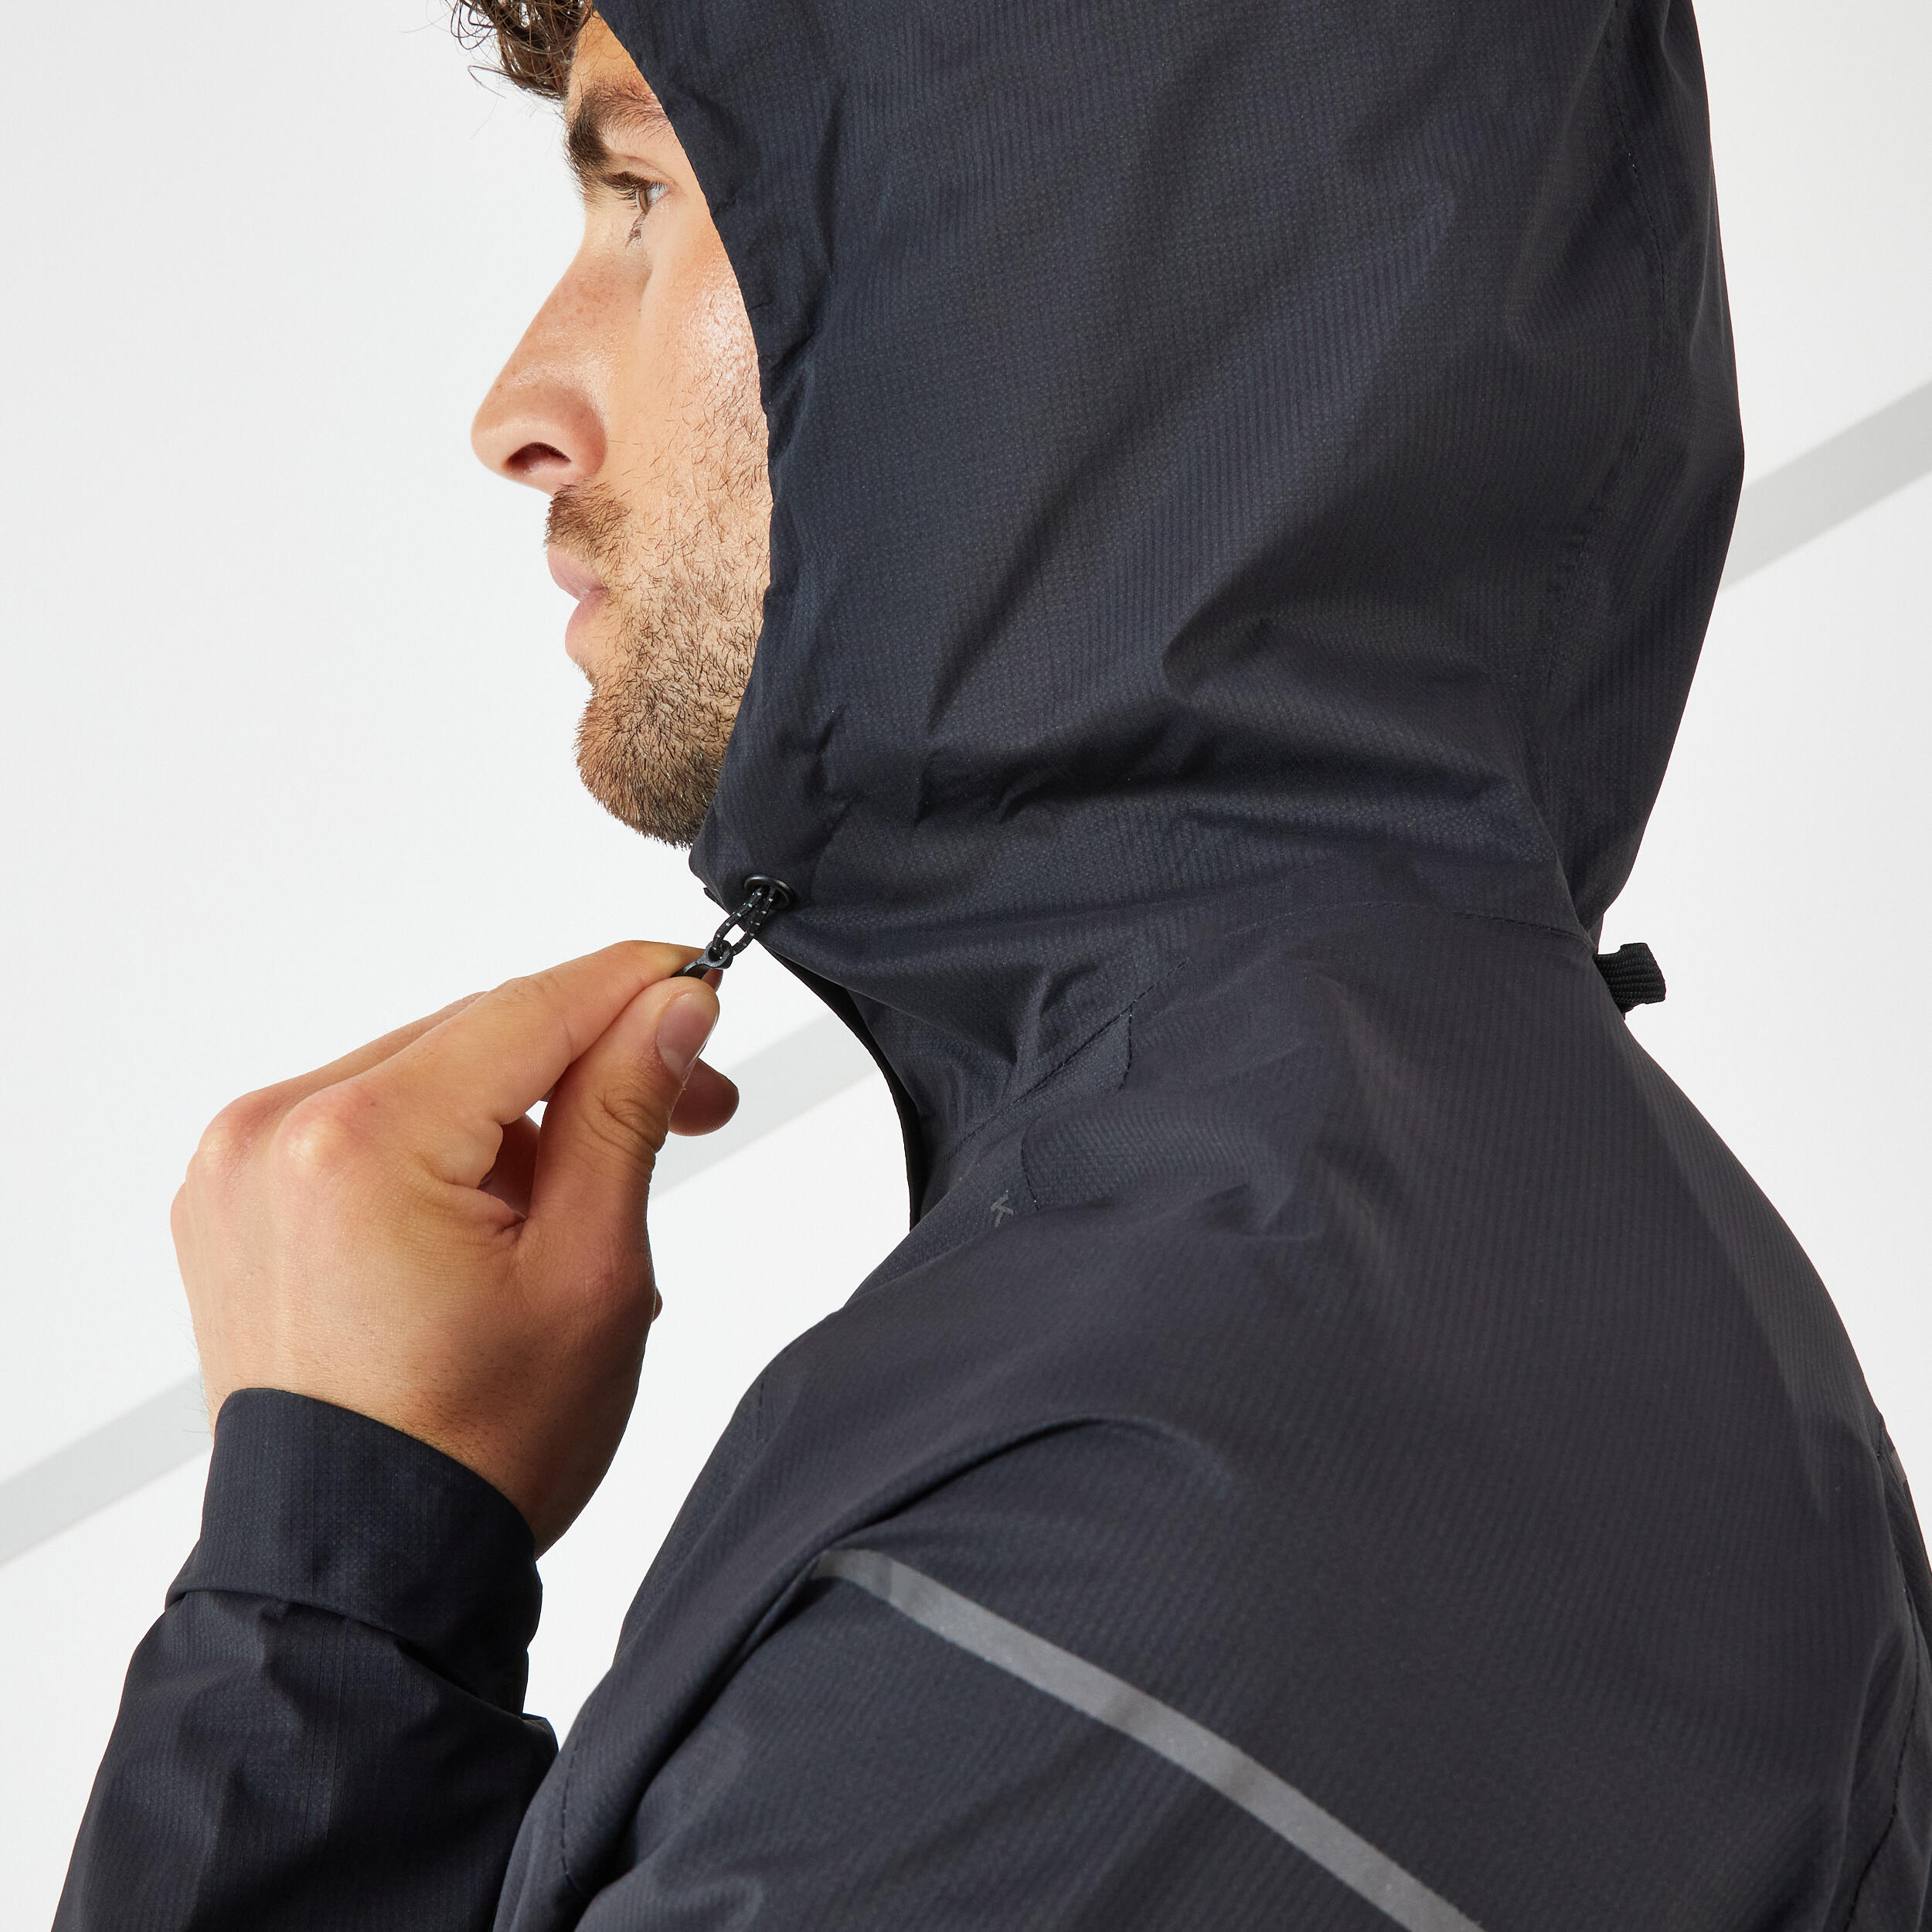 Men’s Waterproof Rain Jacket - Rain+ Black - KIPRUN